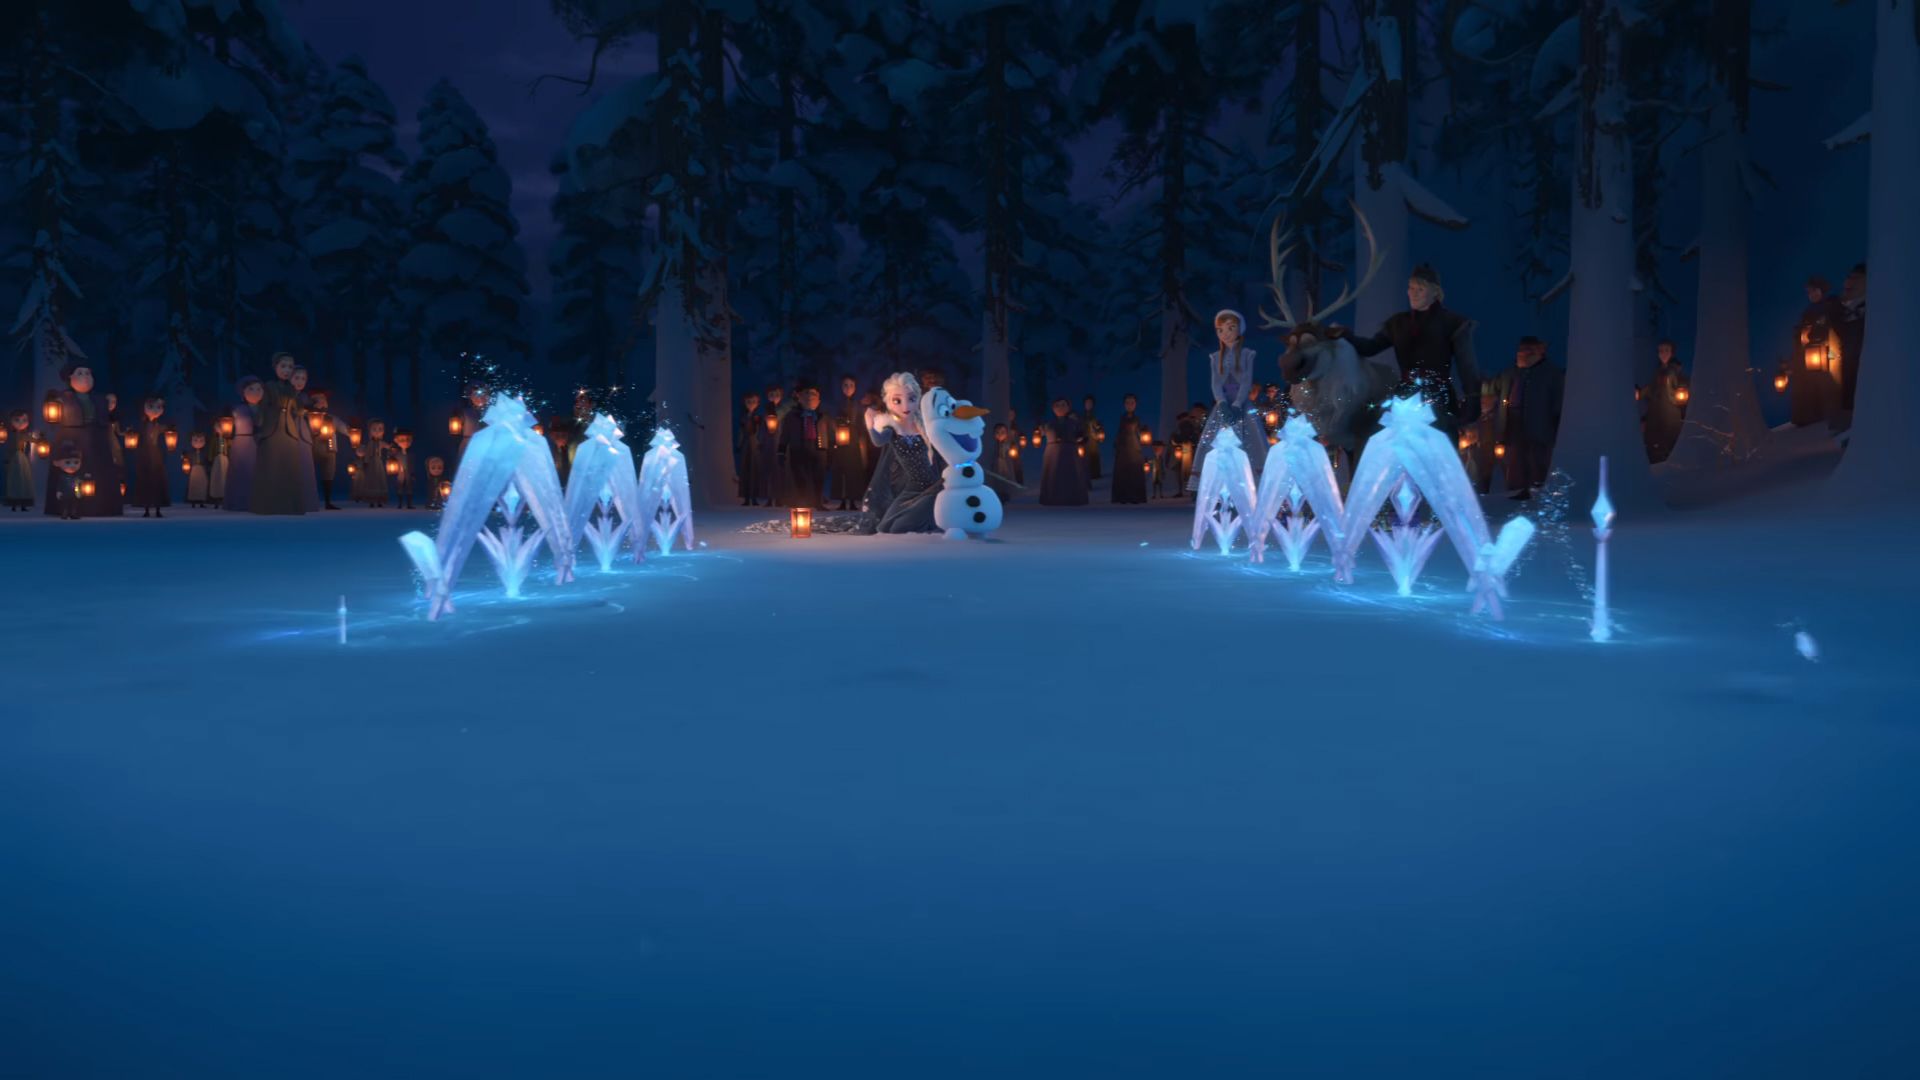 1080p wallpaper from Olaf's Frozen Adventure!